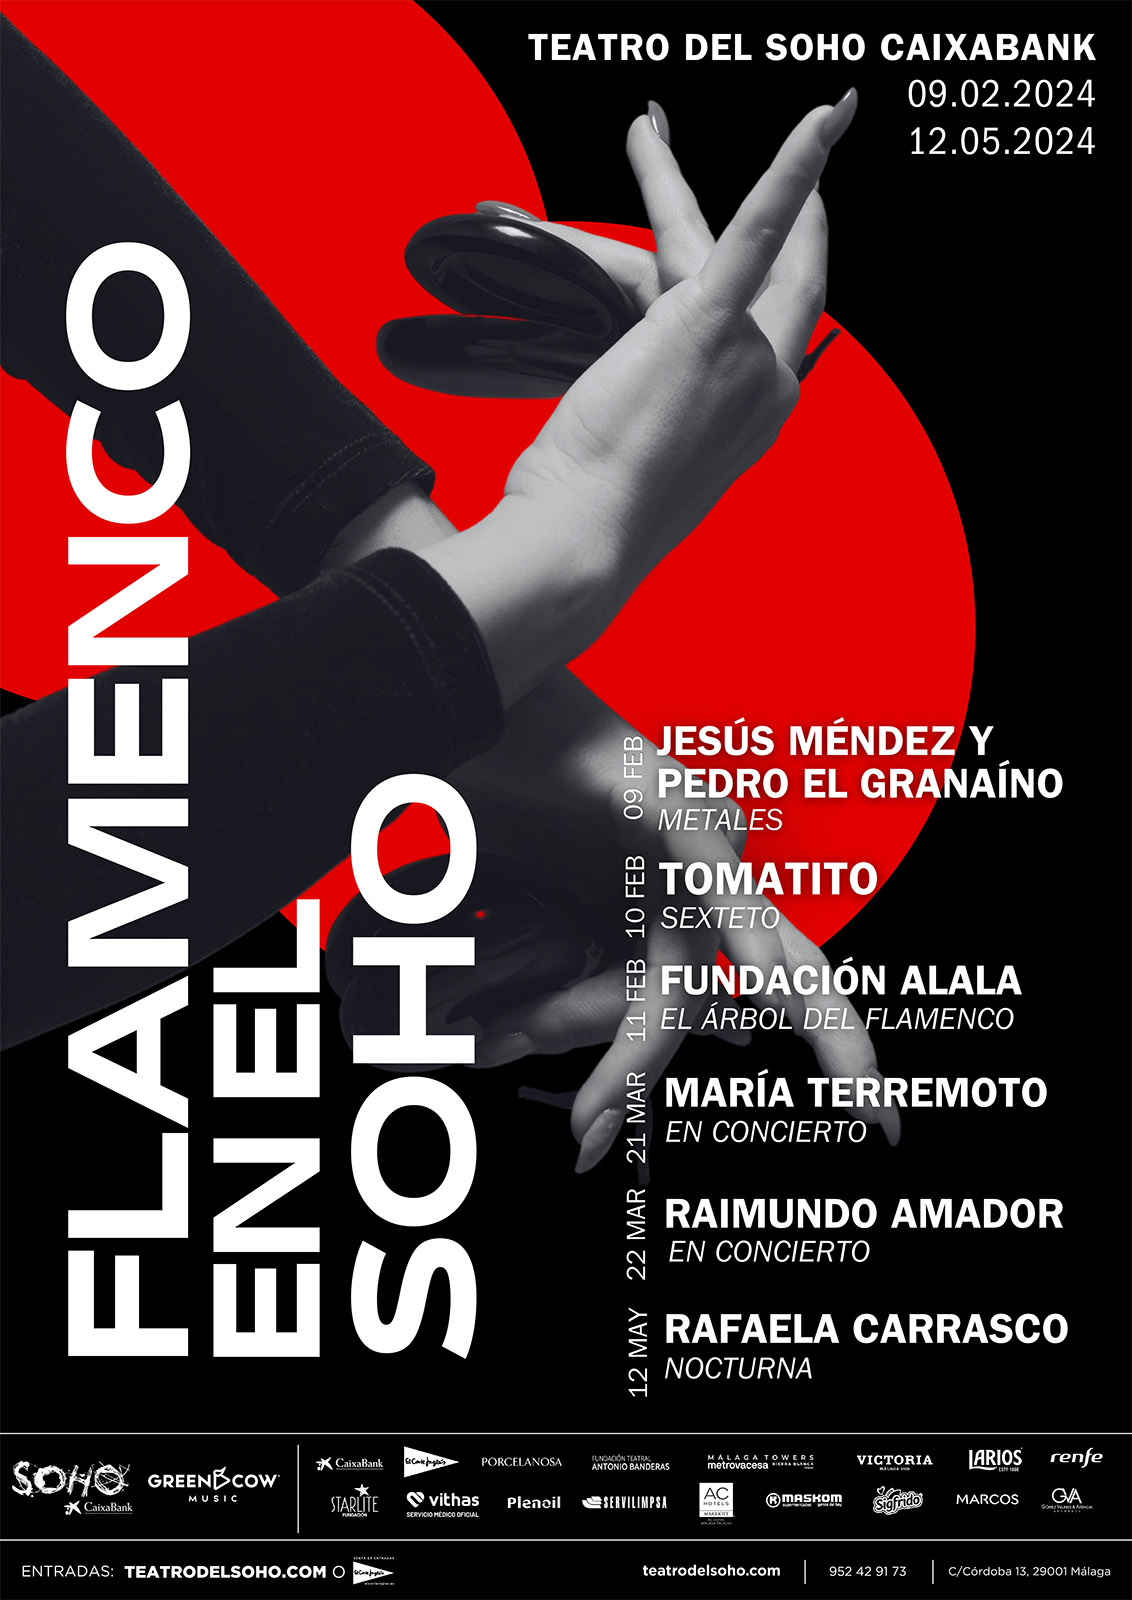 Es el flamenco música clásica española? - Expoflamenco